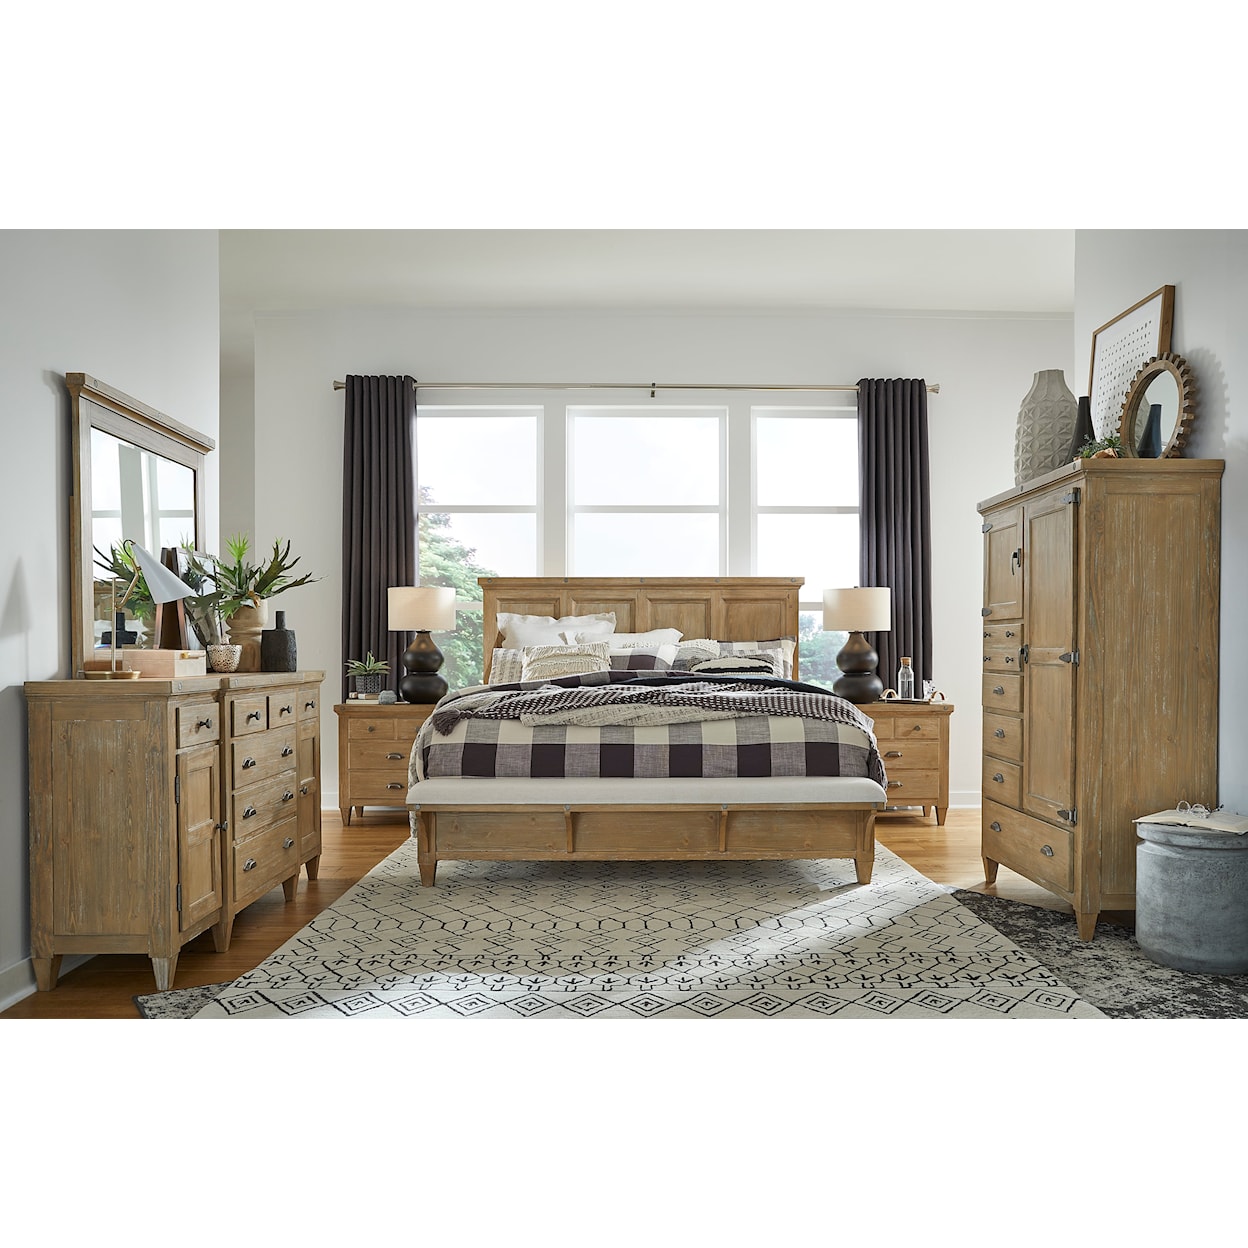 Magnussen Home Lynnfield Bedroom 3-Drawer Nightstand